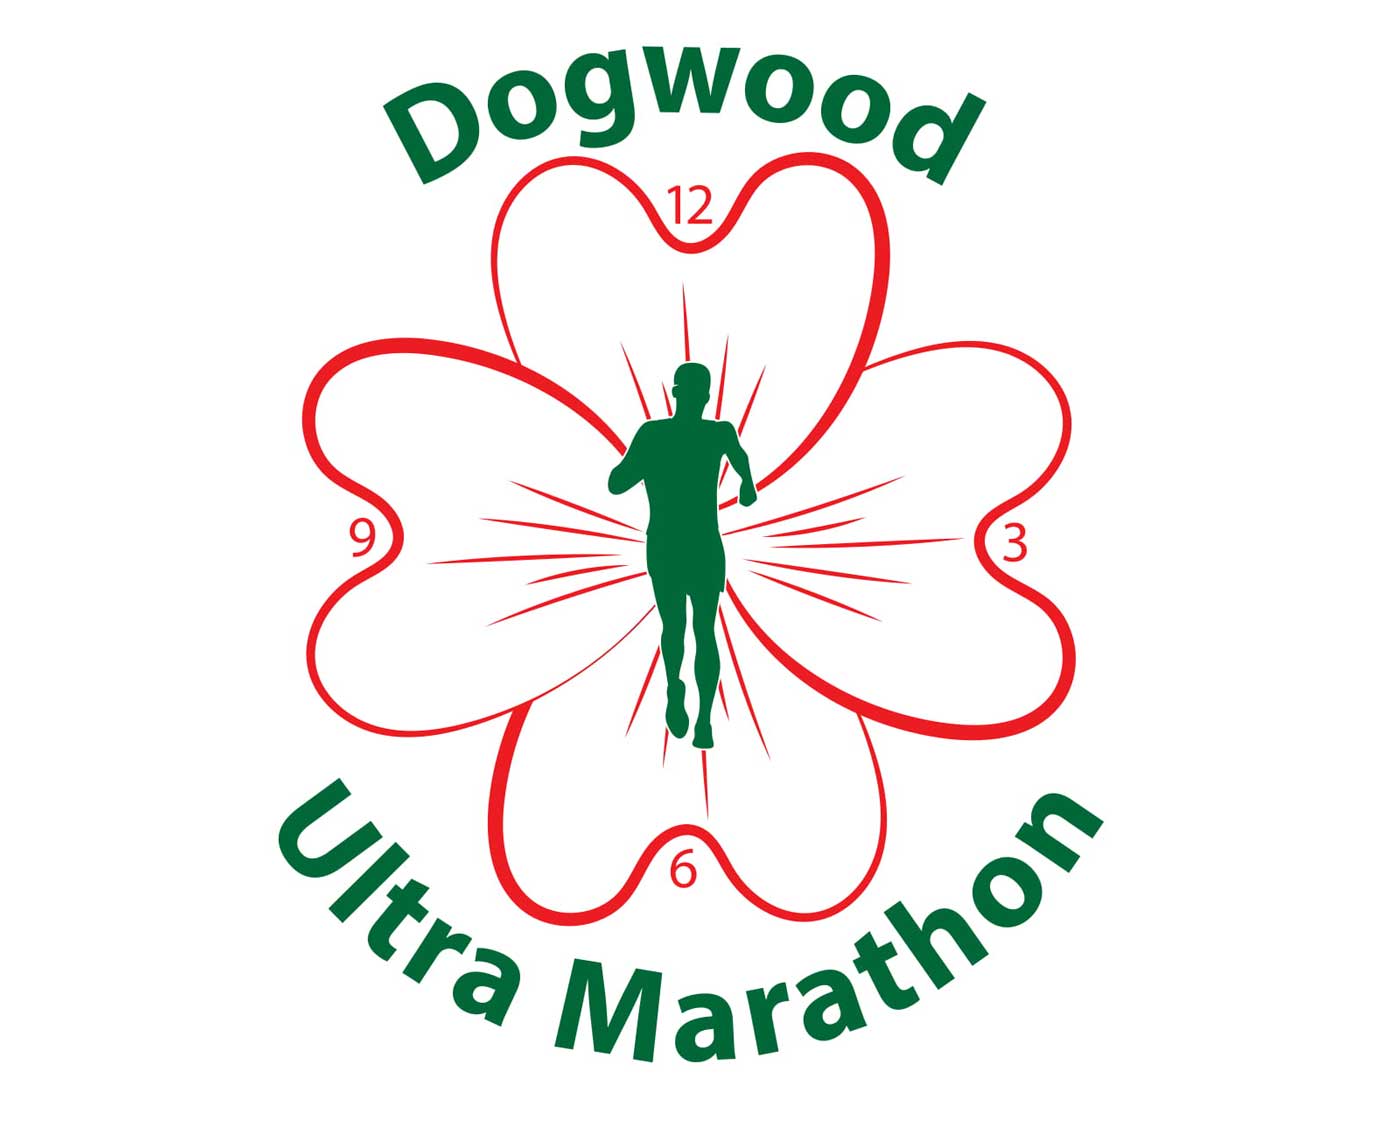 Dogwood Ultra Marathon